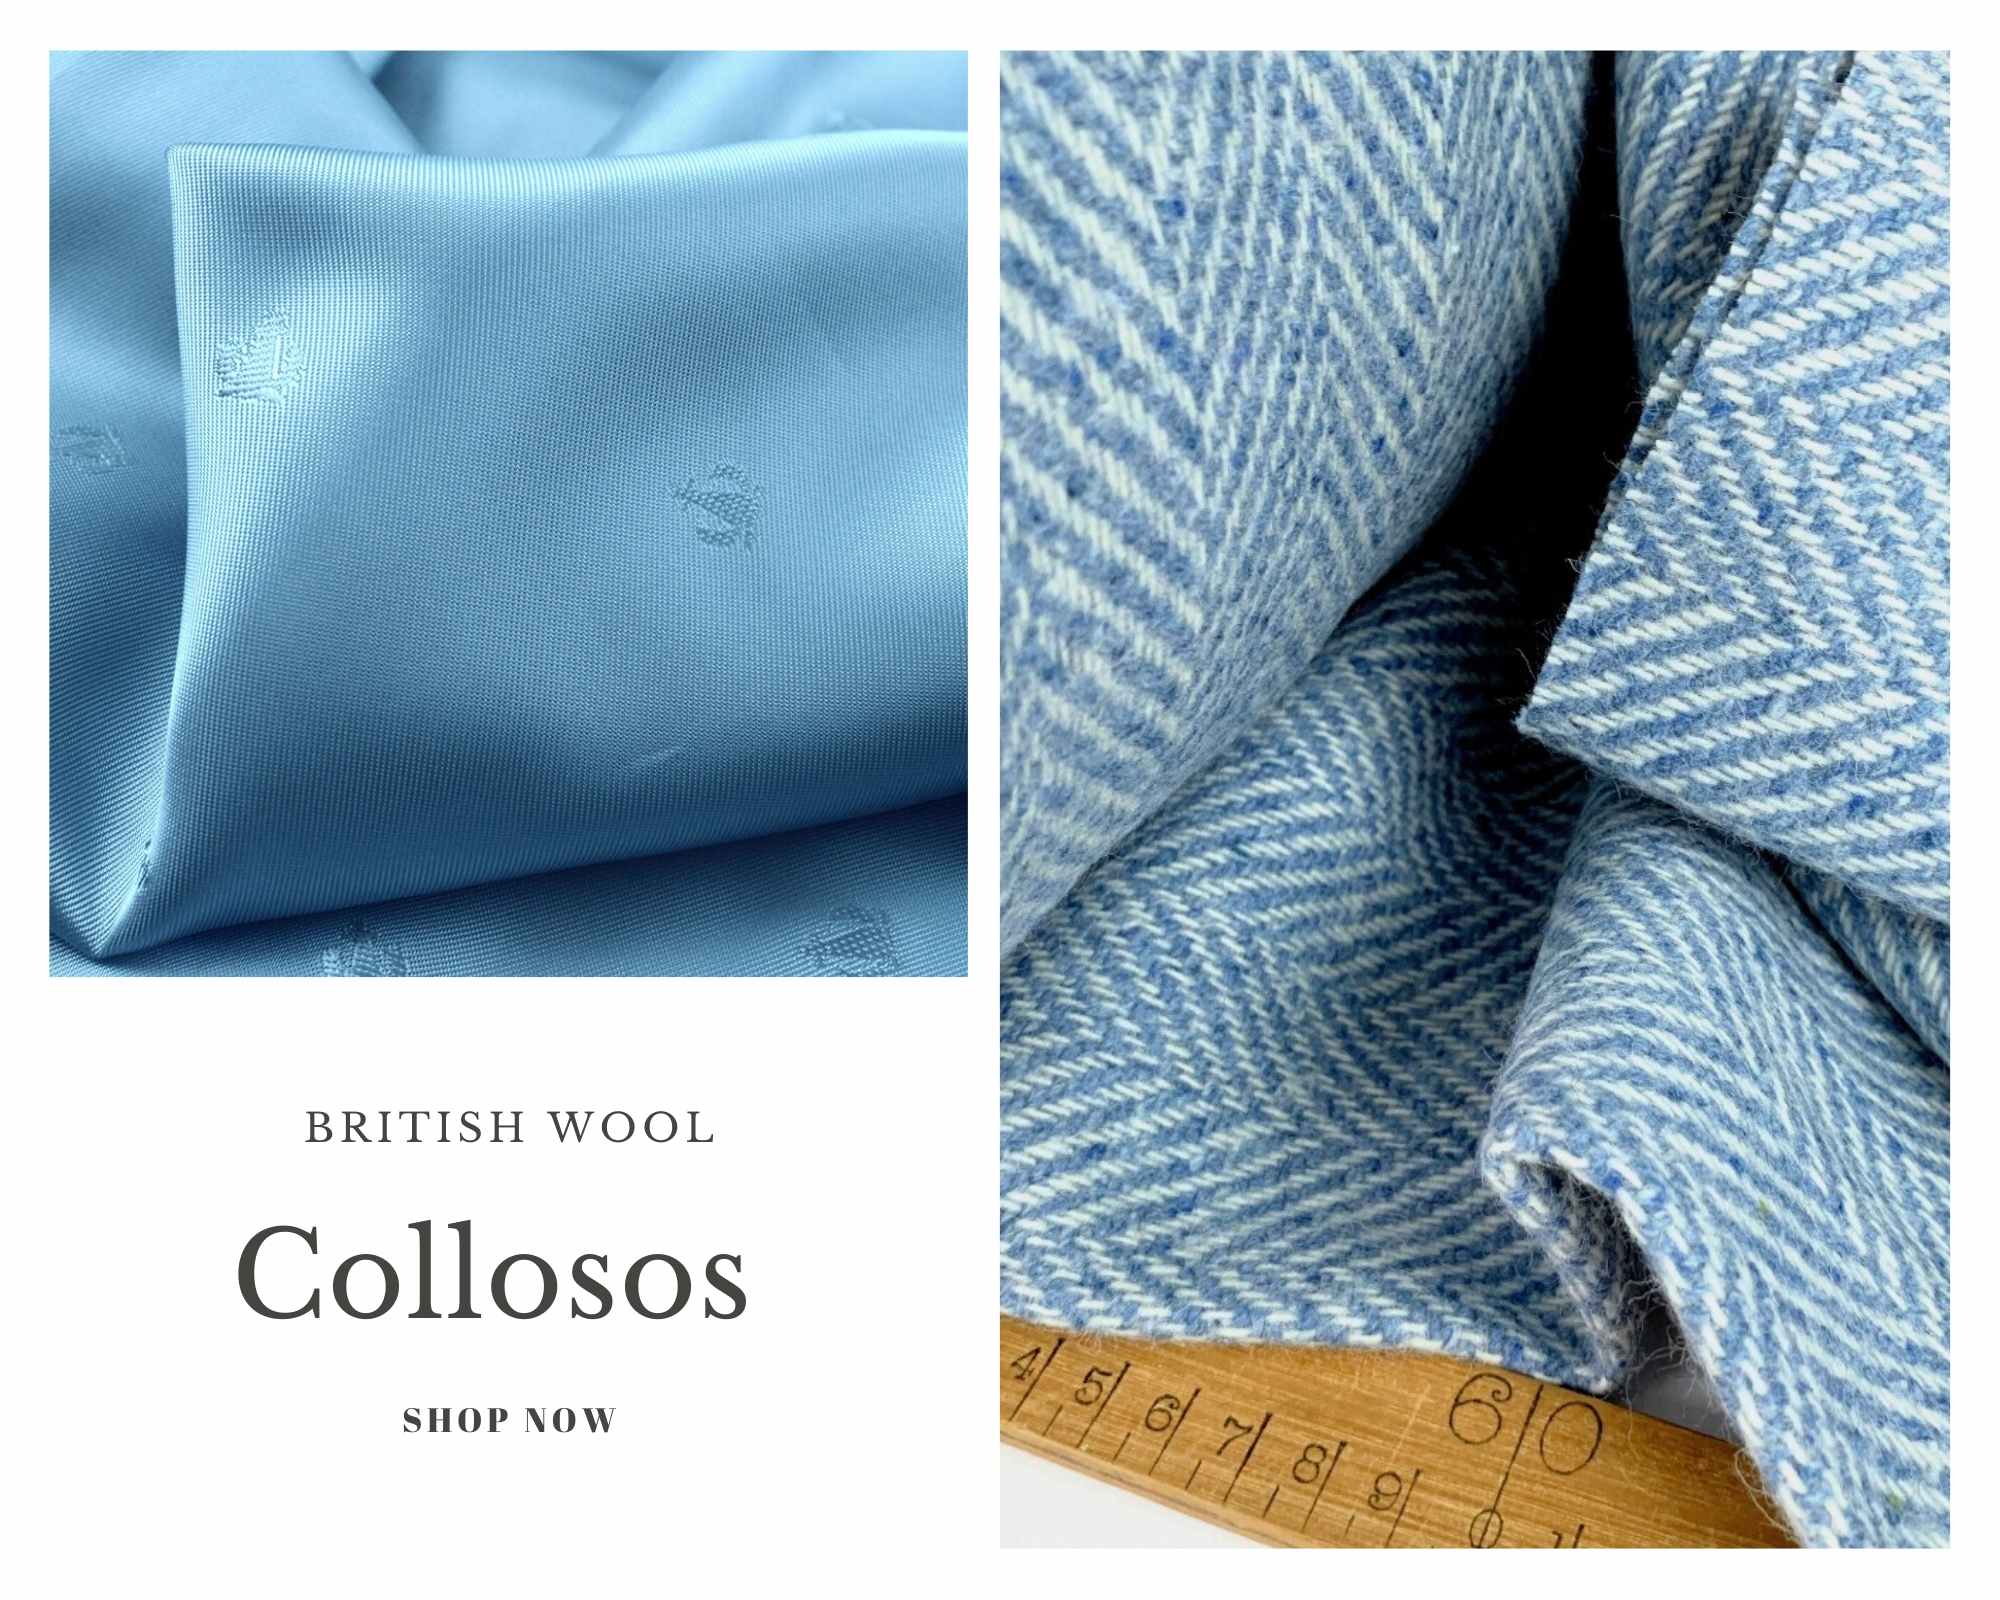 Coating Fabric - Collosos - black and white herringbone